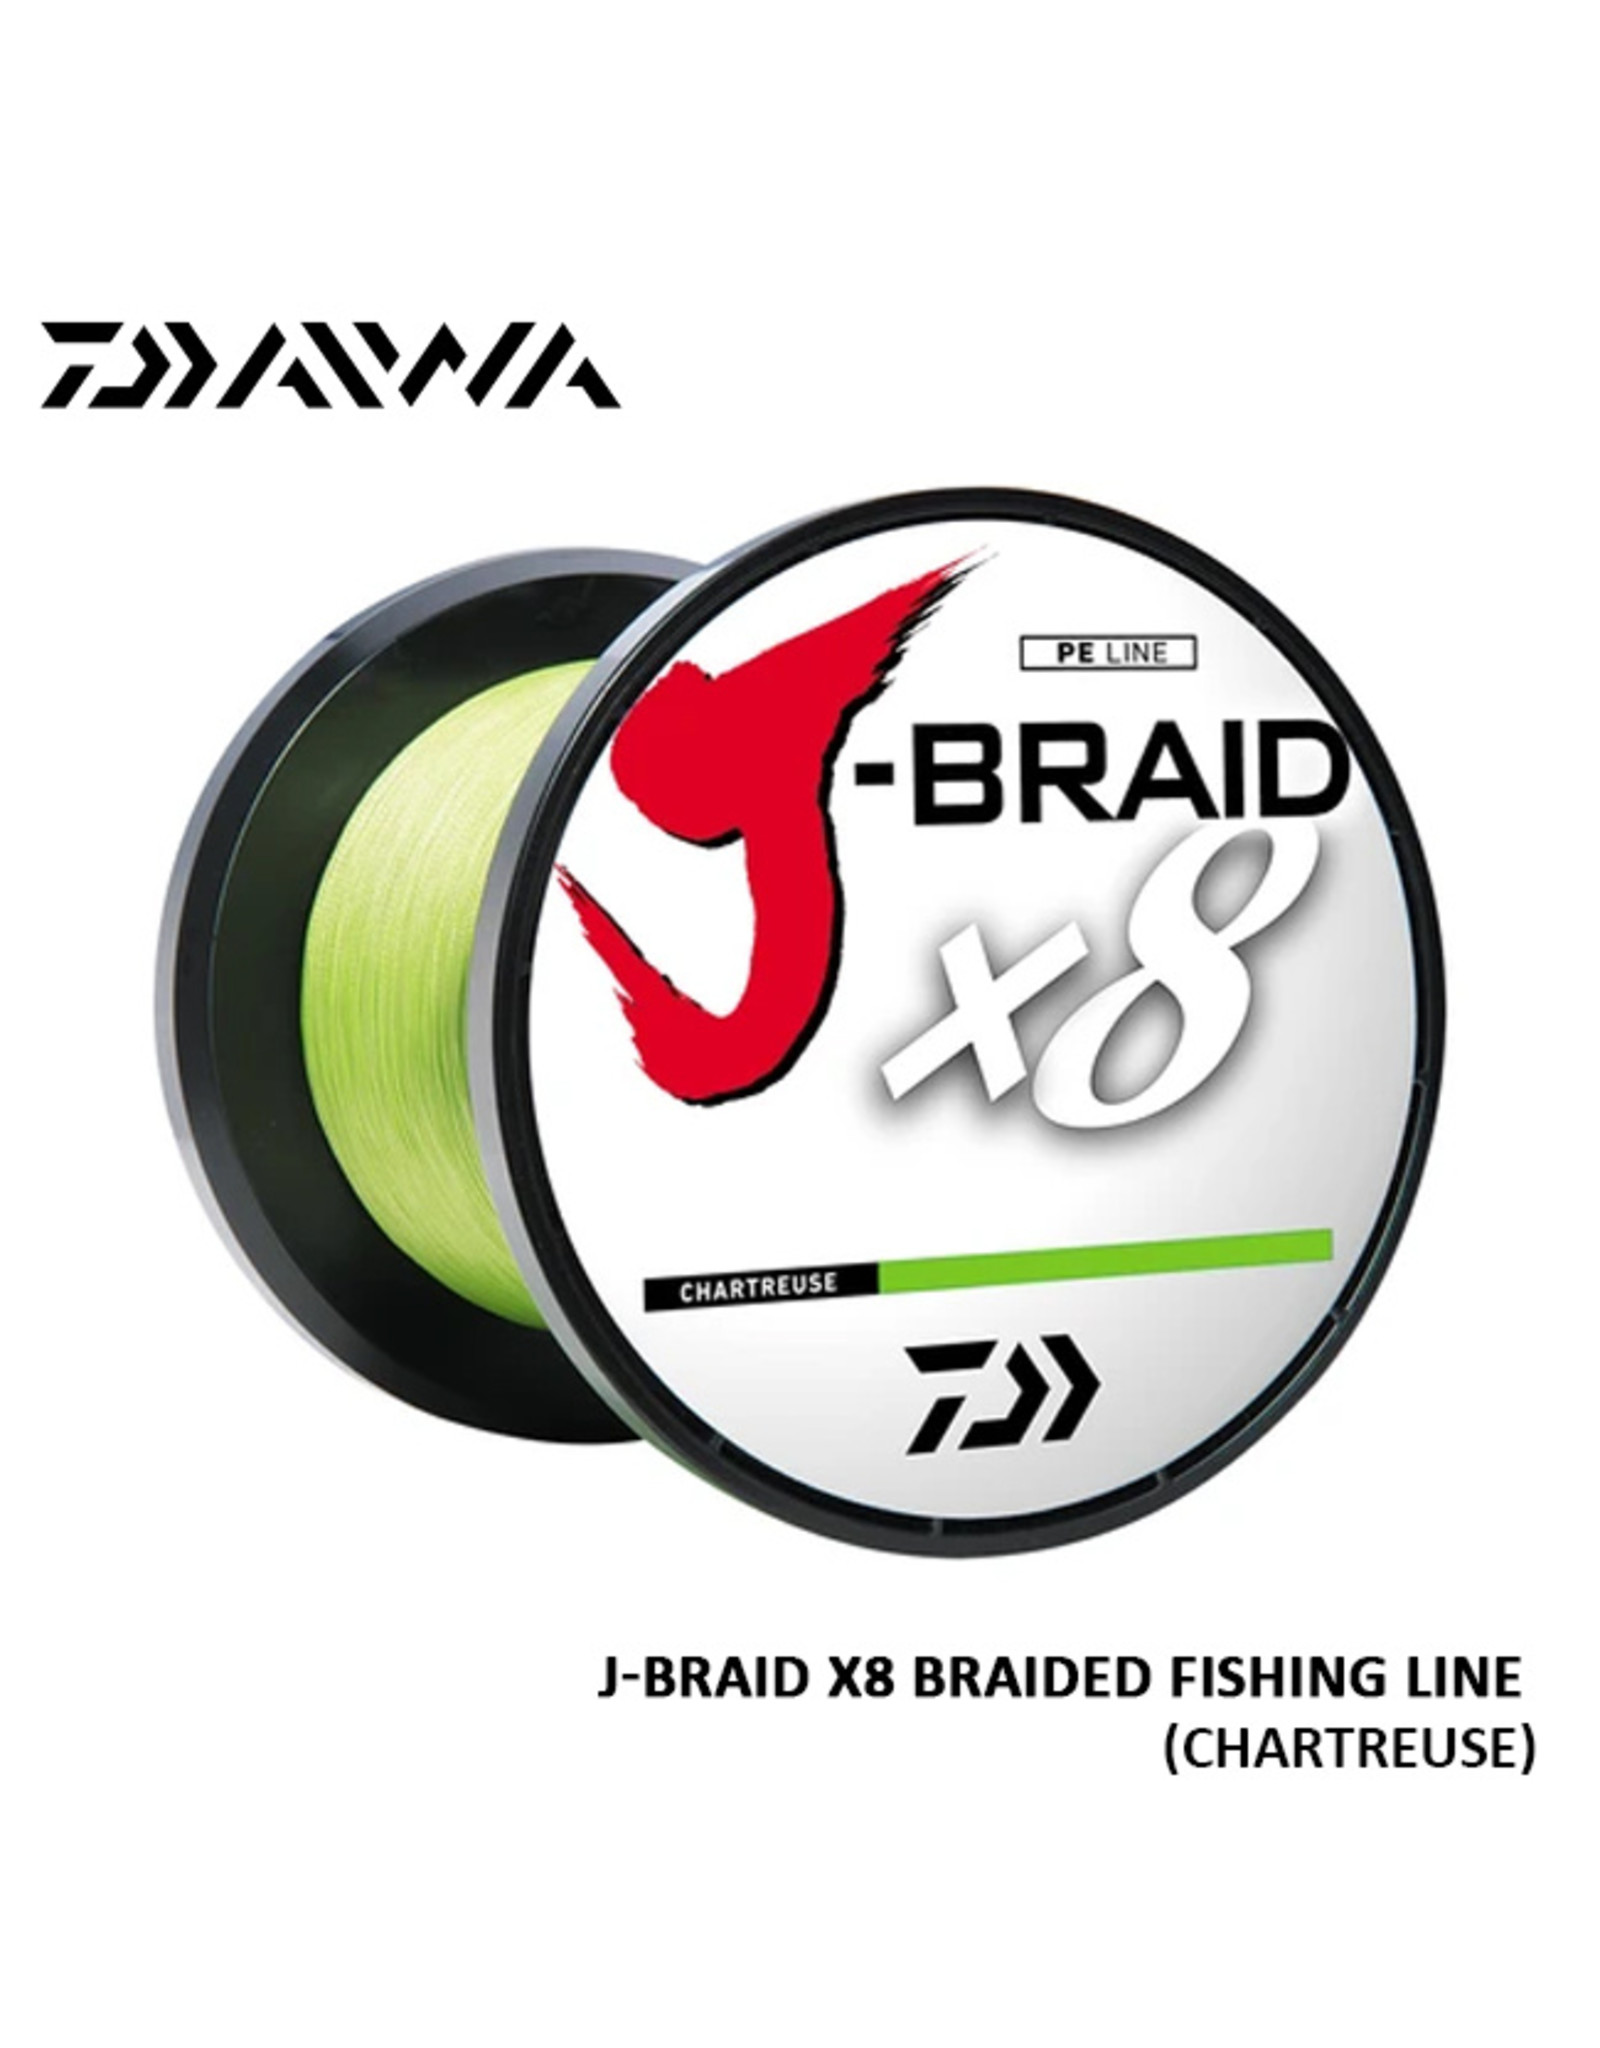 DAIWA (DAI) DAI, J-BRAID X8 FISHING LINE 300METER/CHARTREUSE 15#